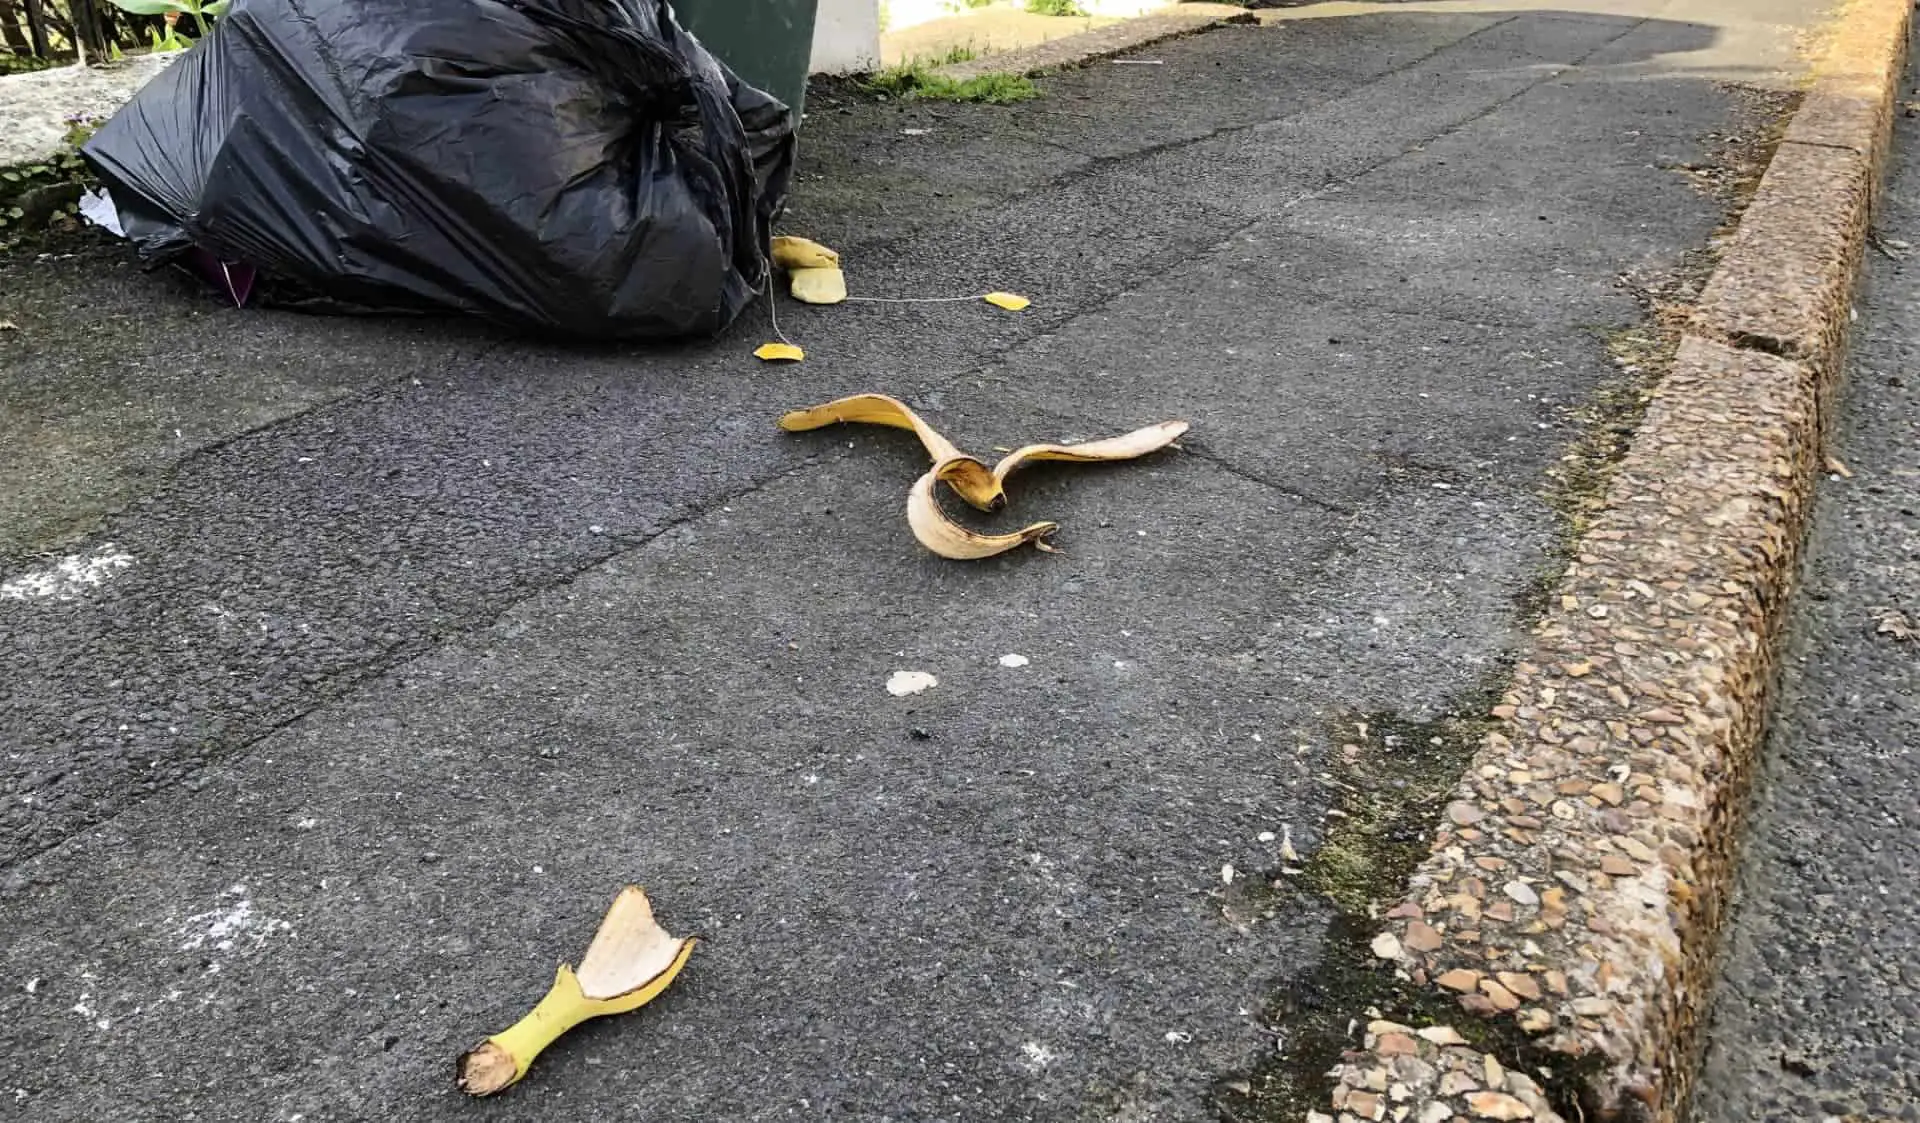 Banana skins and tea bags on road from black bin bag